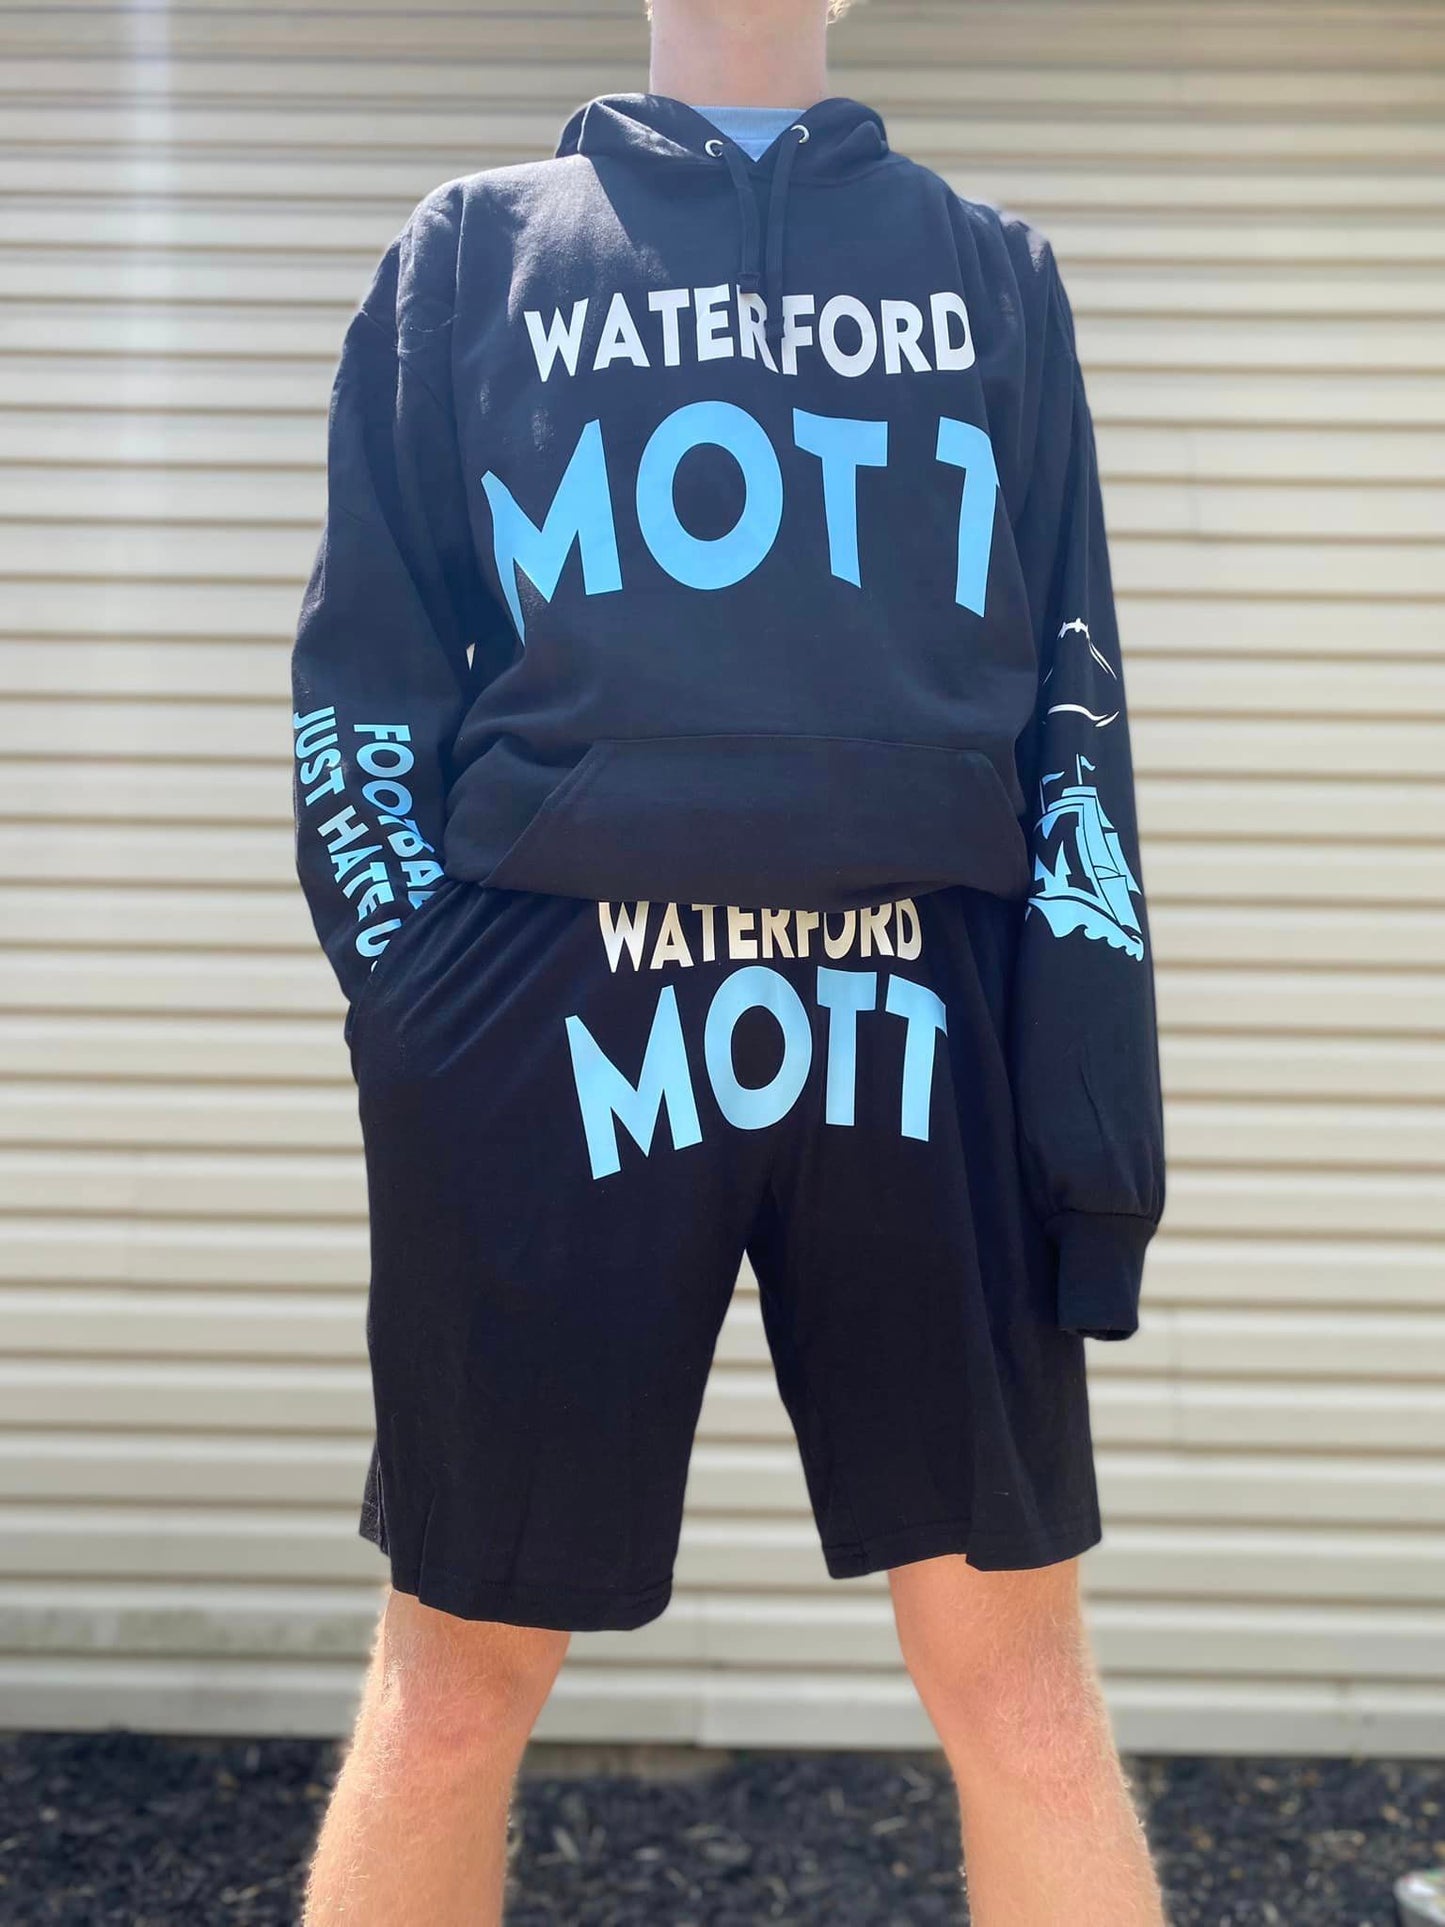 Waterford Mott Black Shorts set